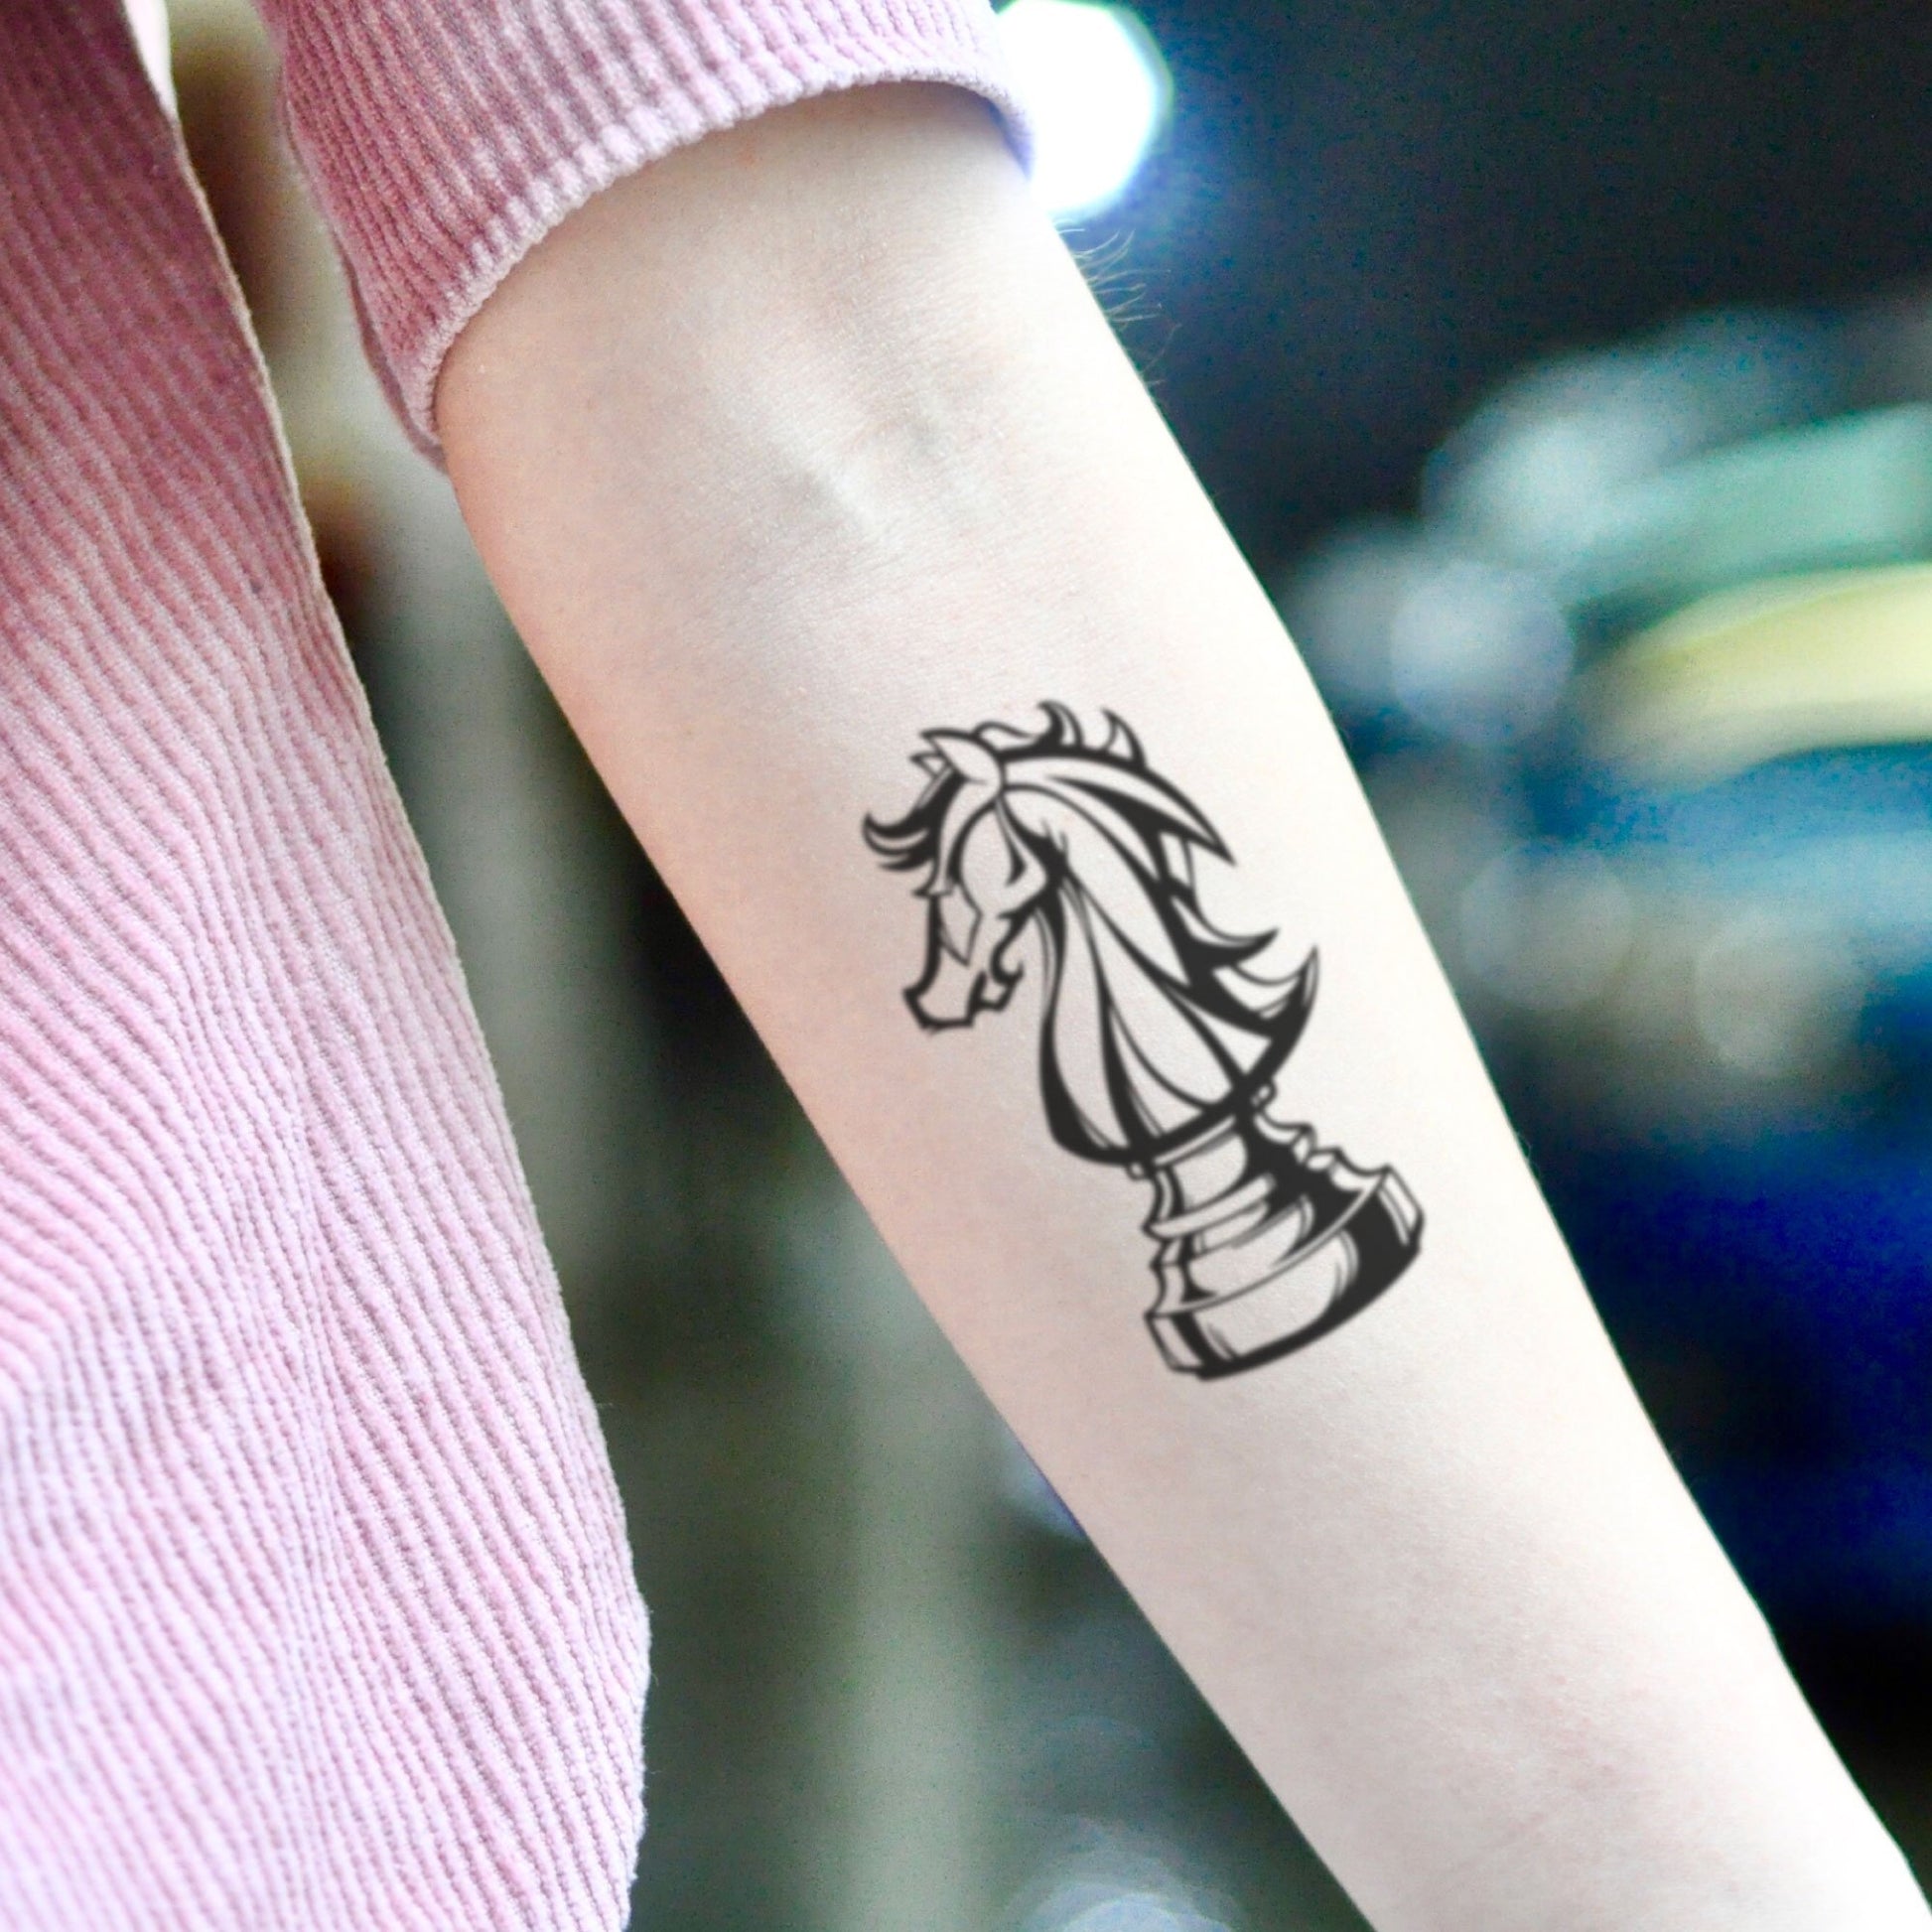 fake small chess knight piece illustrative temporary tattoo sticker design idea on inner arm